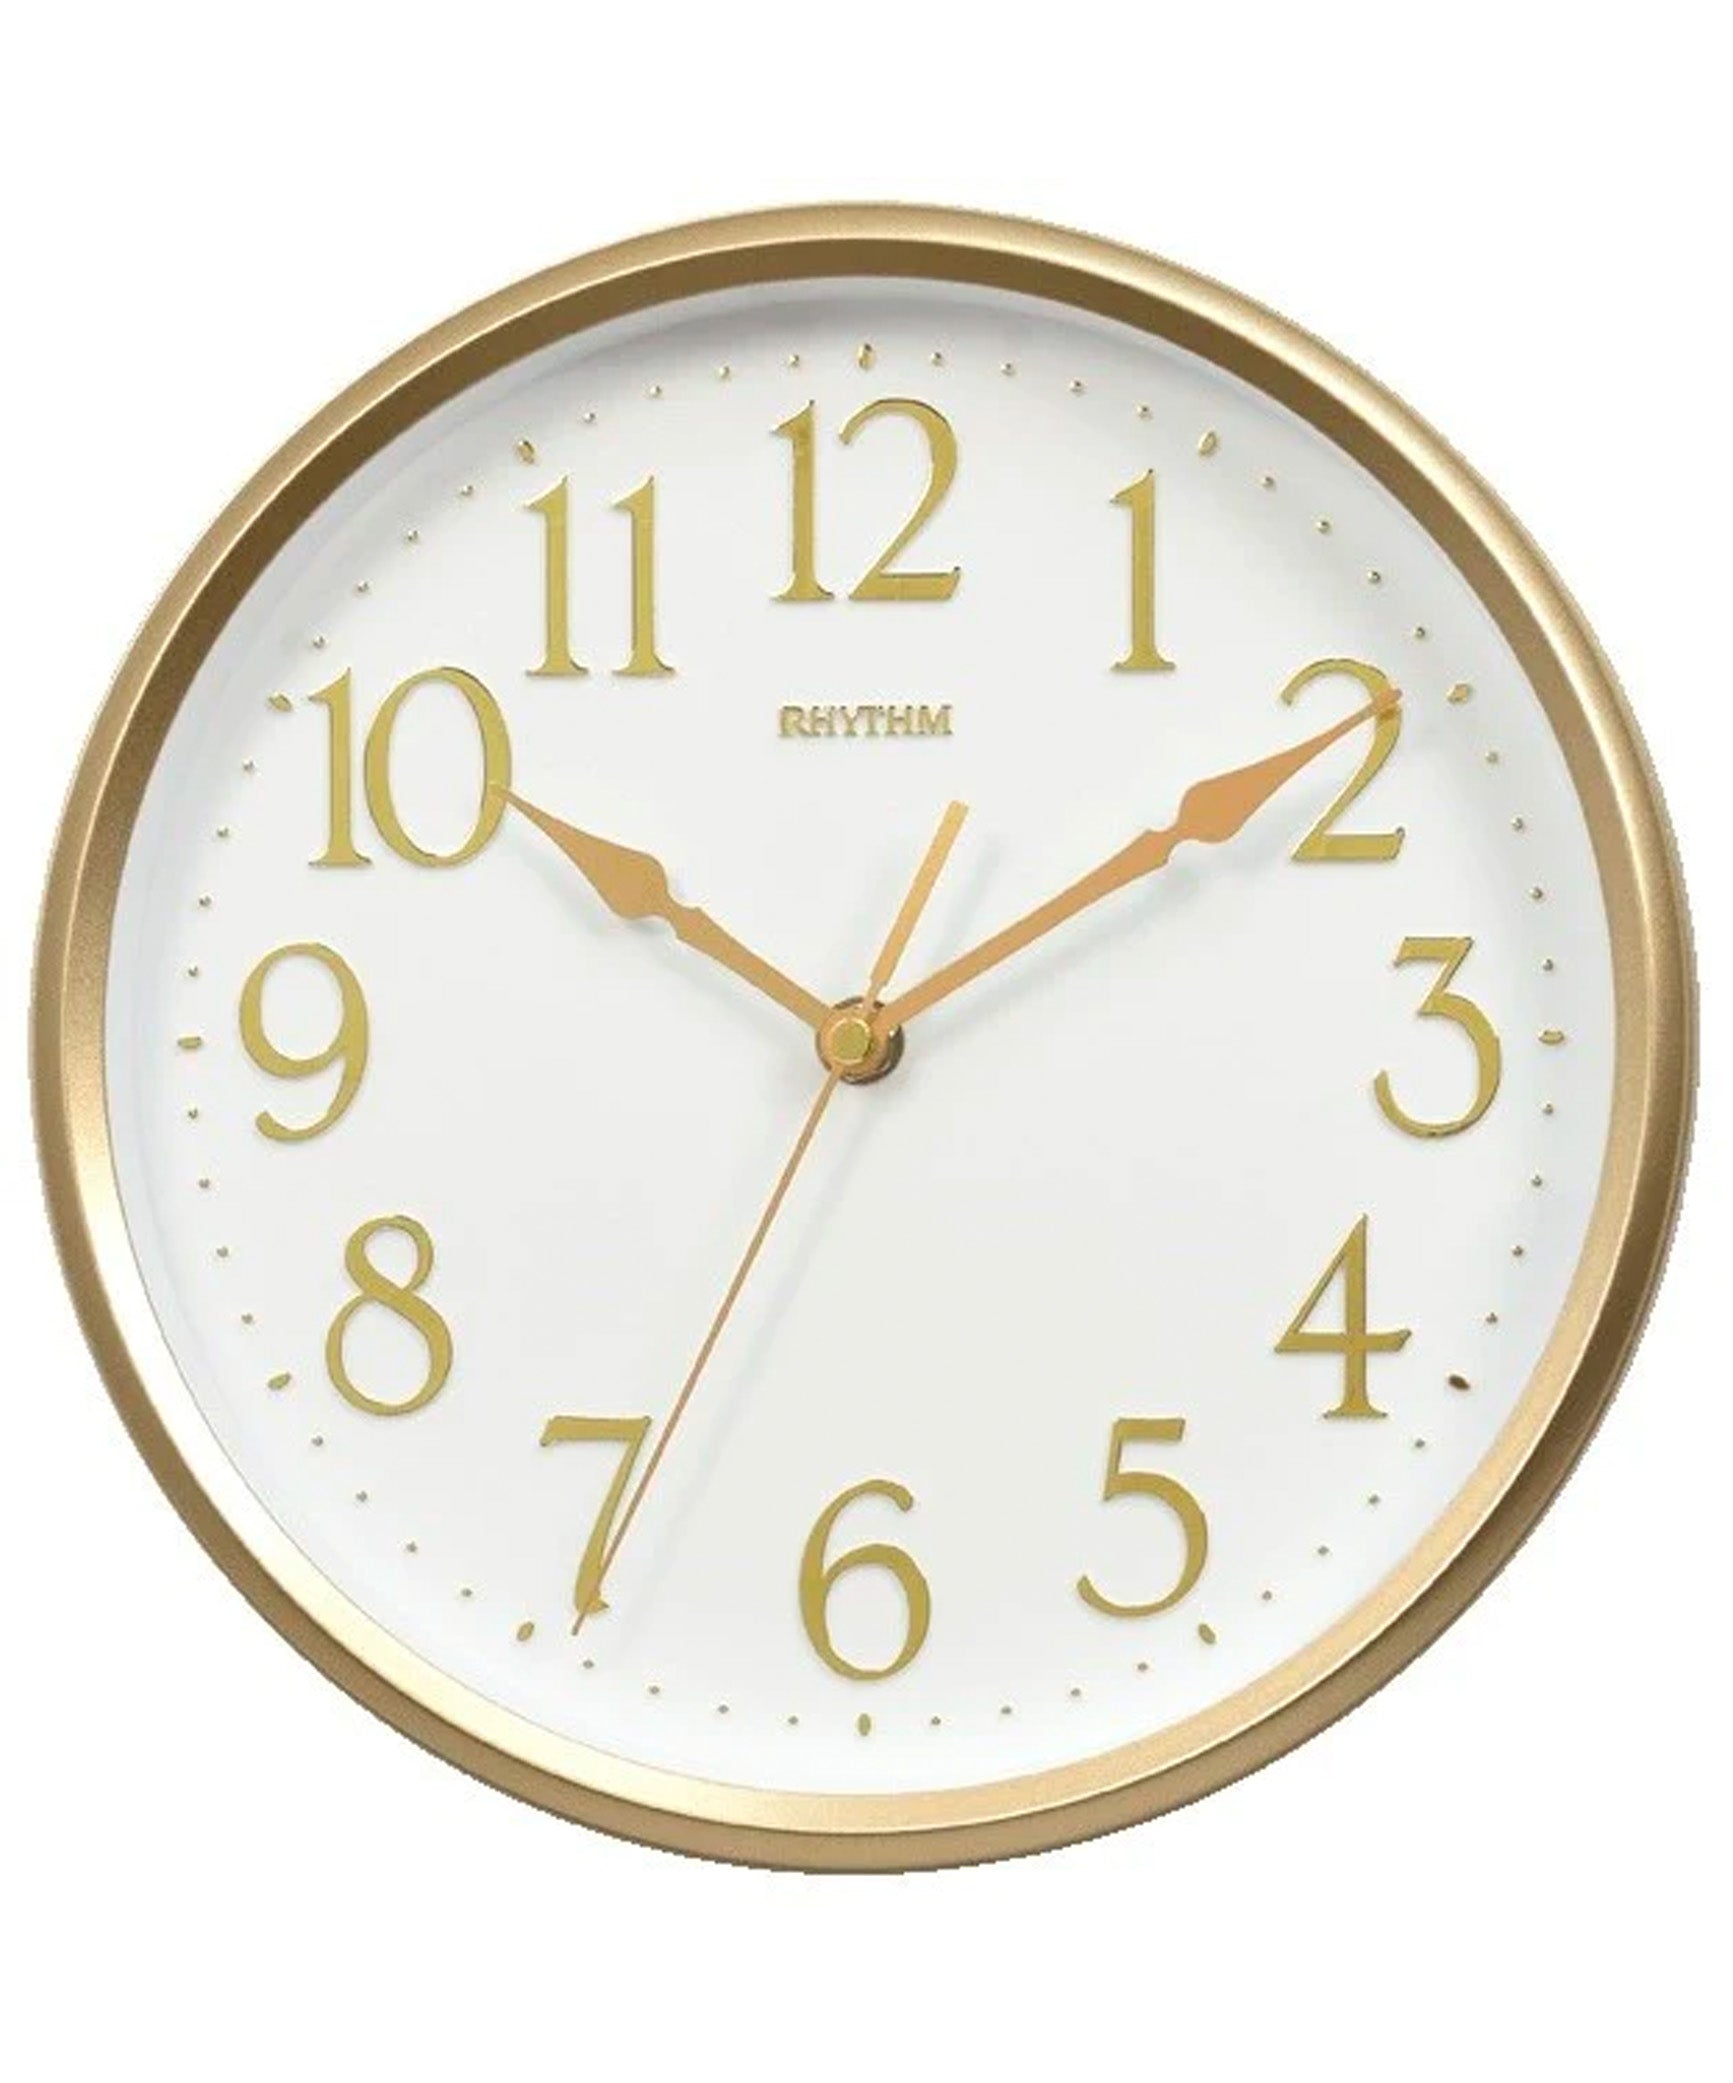 Rhythm Wall Clock, Analog Clock White Dial, CMG577NR18